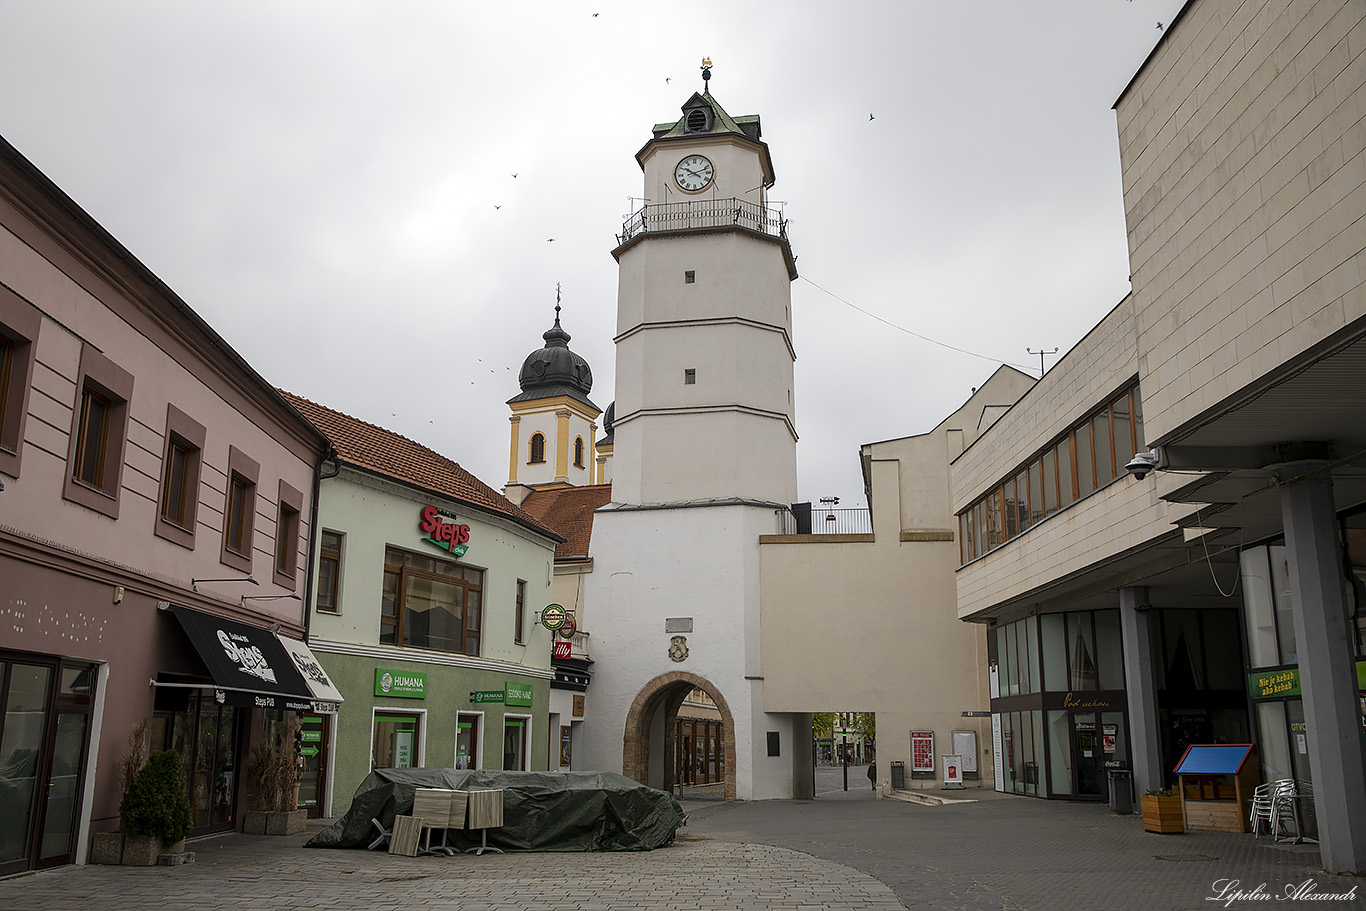 Тренчин (Trenčín) - Словакия (Slovensko)